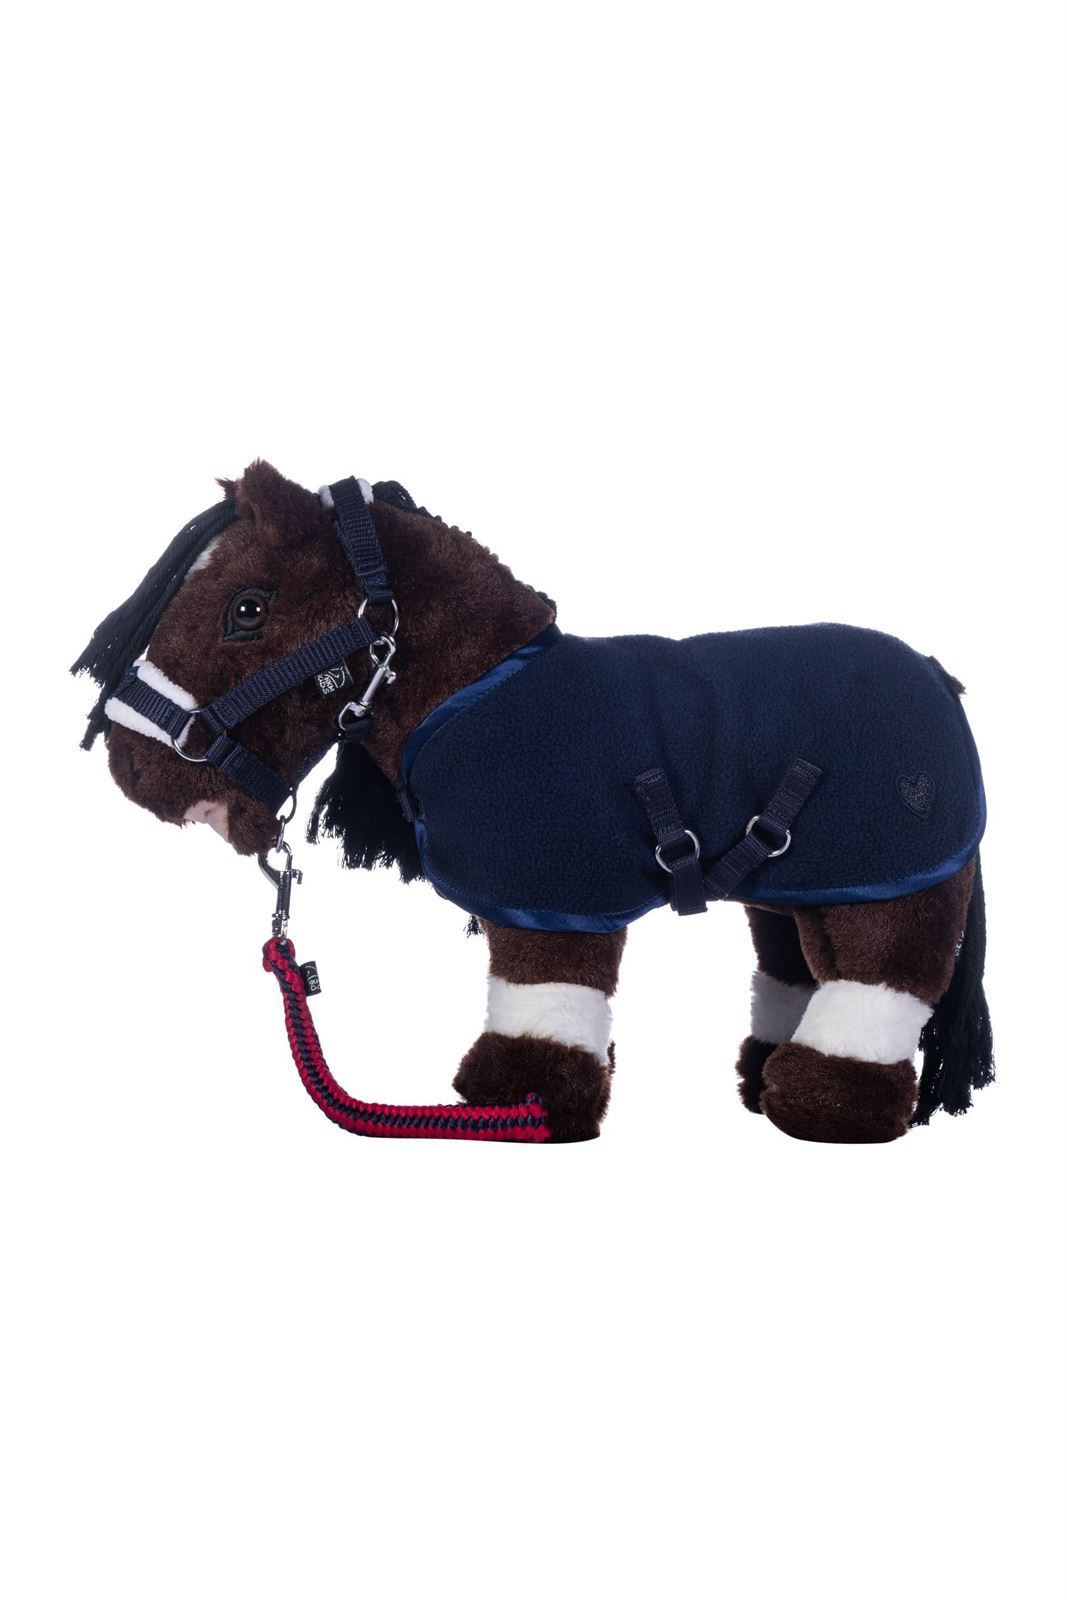 Set accesorios Cuddle pony HKM Sports Equipment Manta, cabezada y ramal, color azul marino - Imagen 2